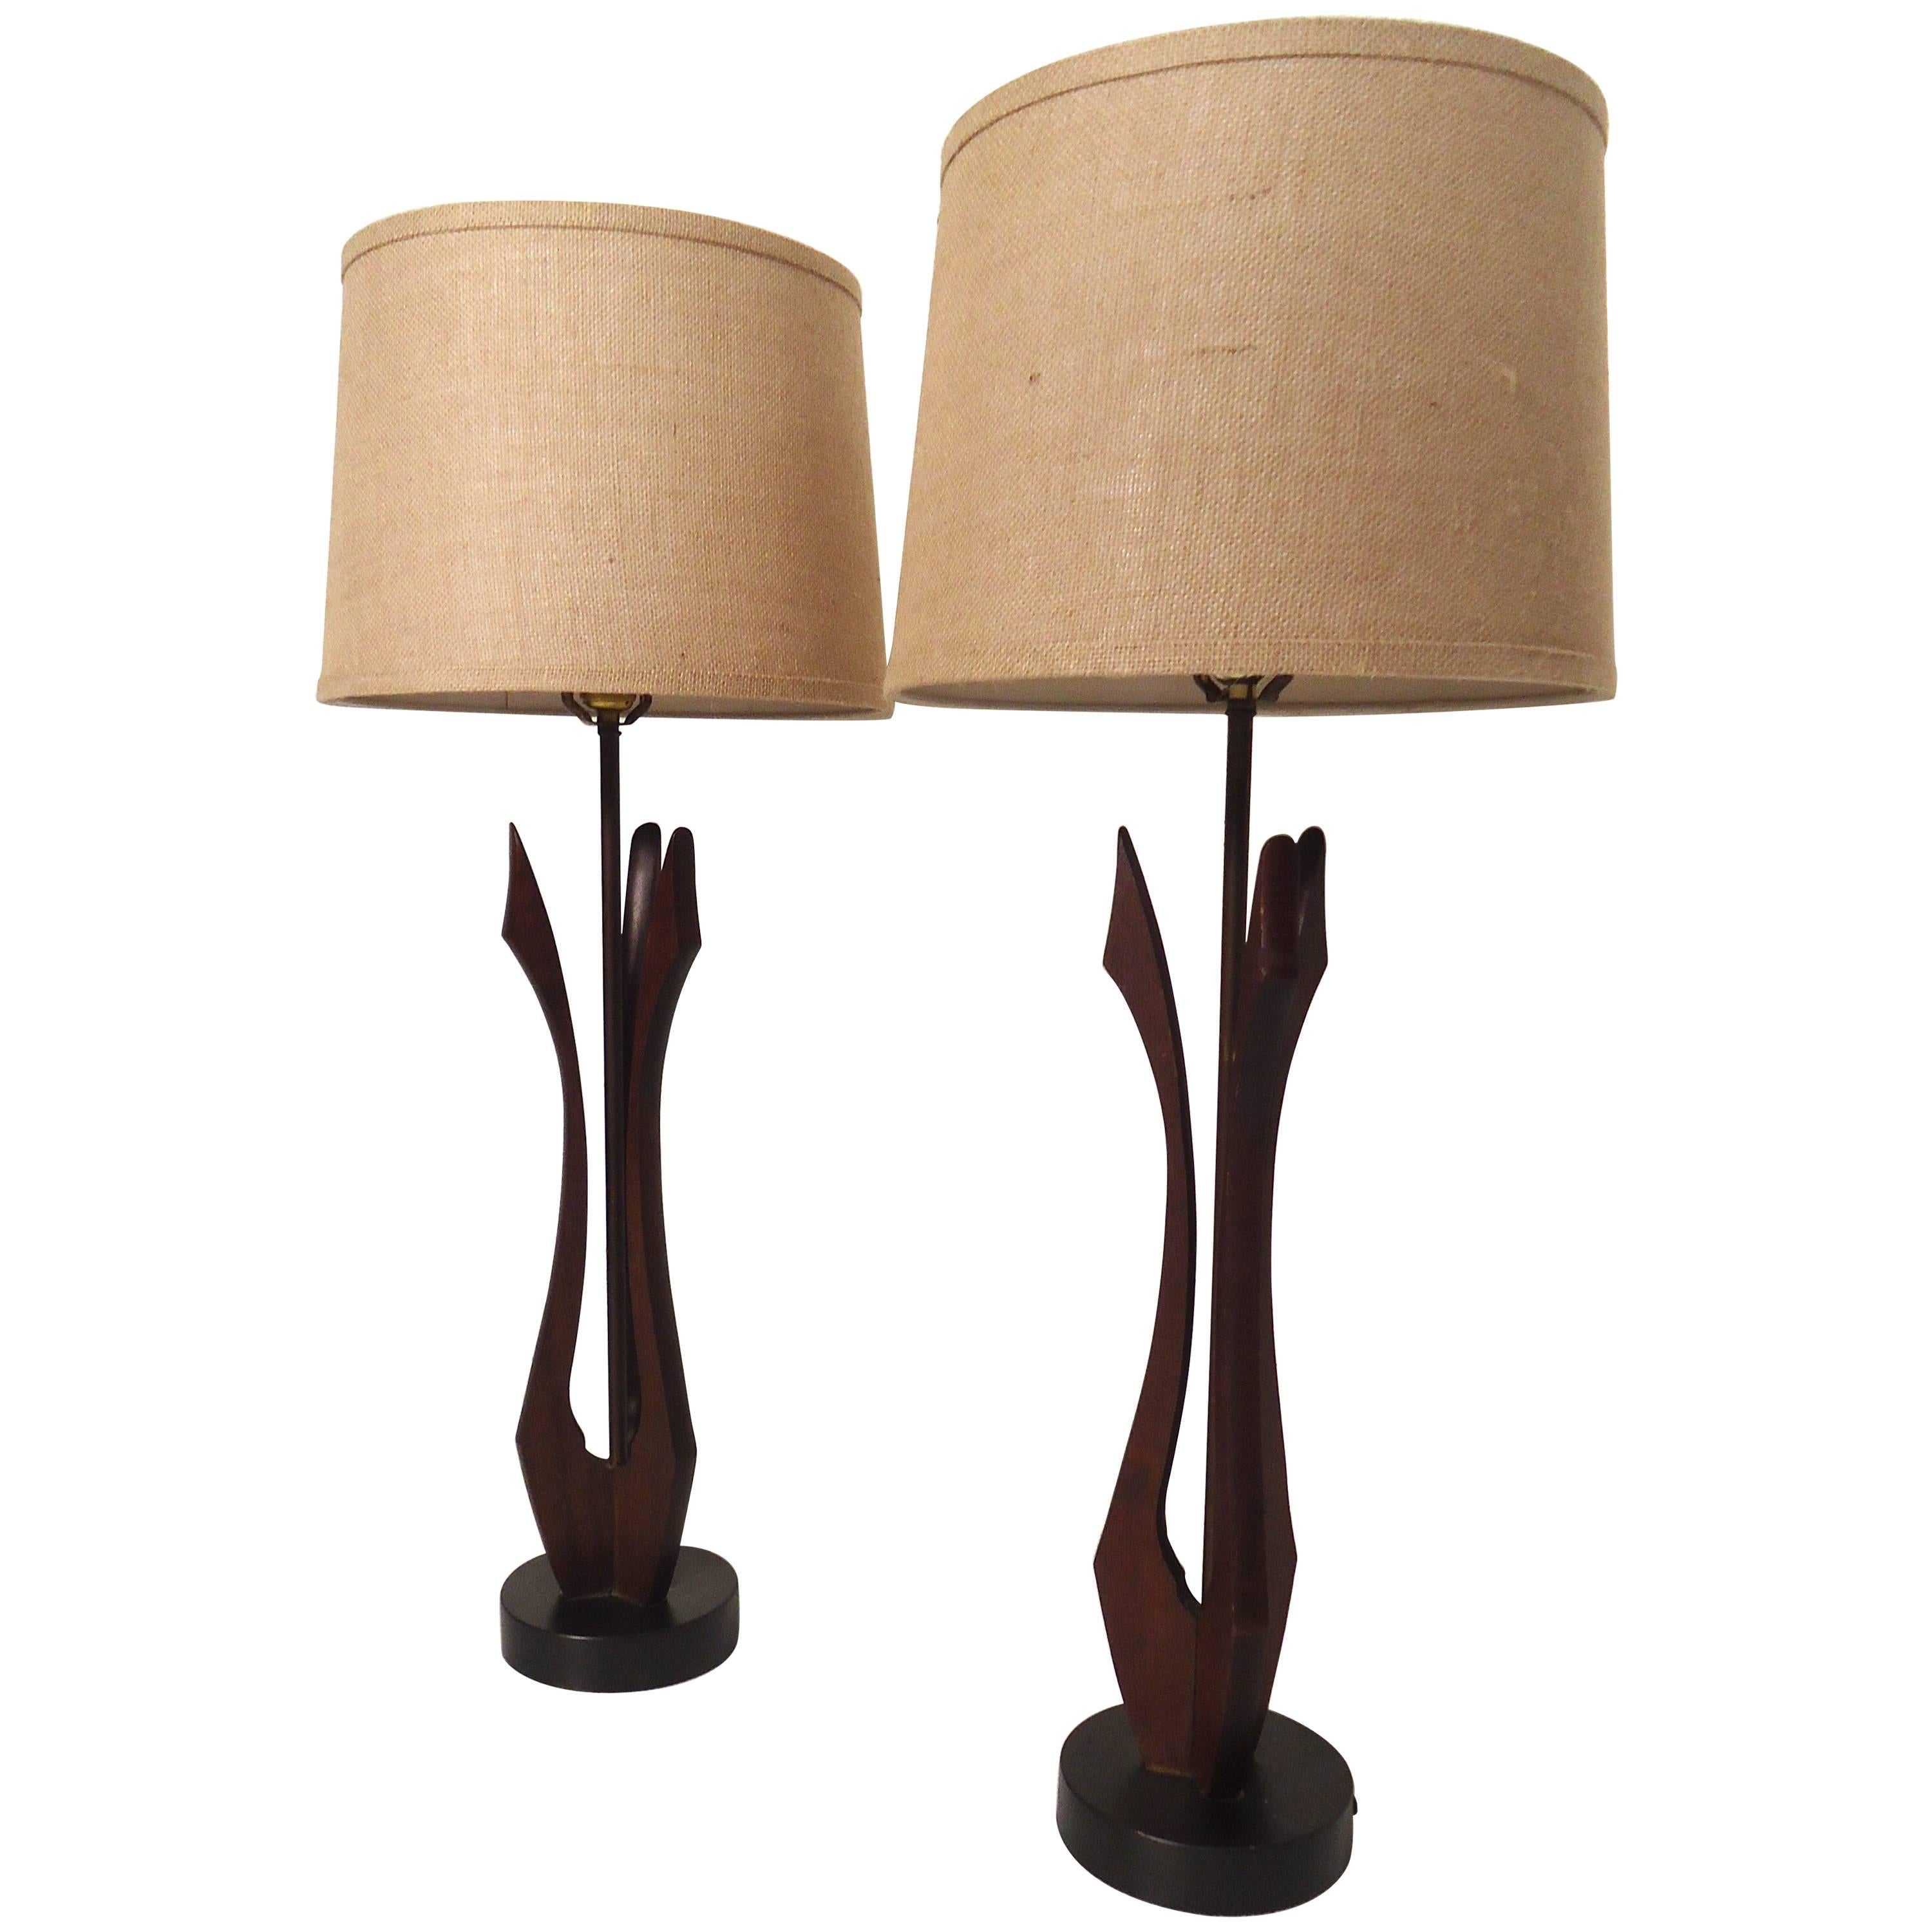 Pair of Stylish Mid-Century Modern Lamps